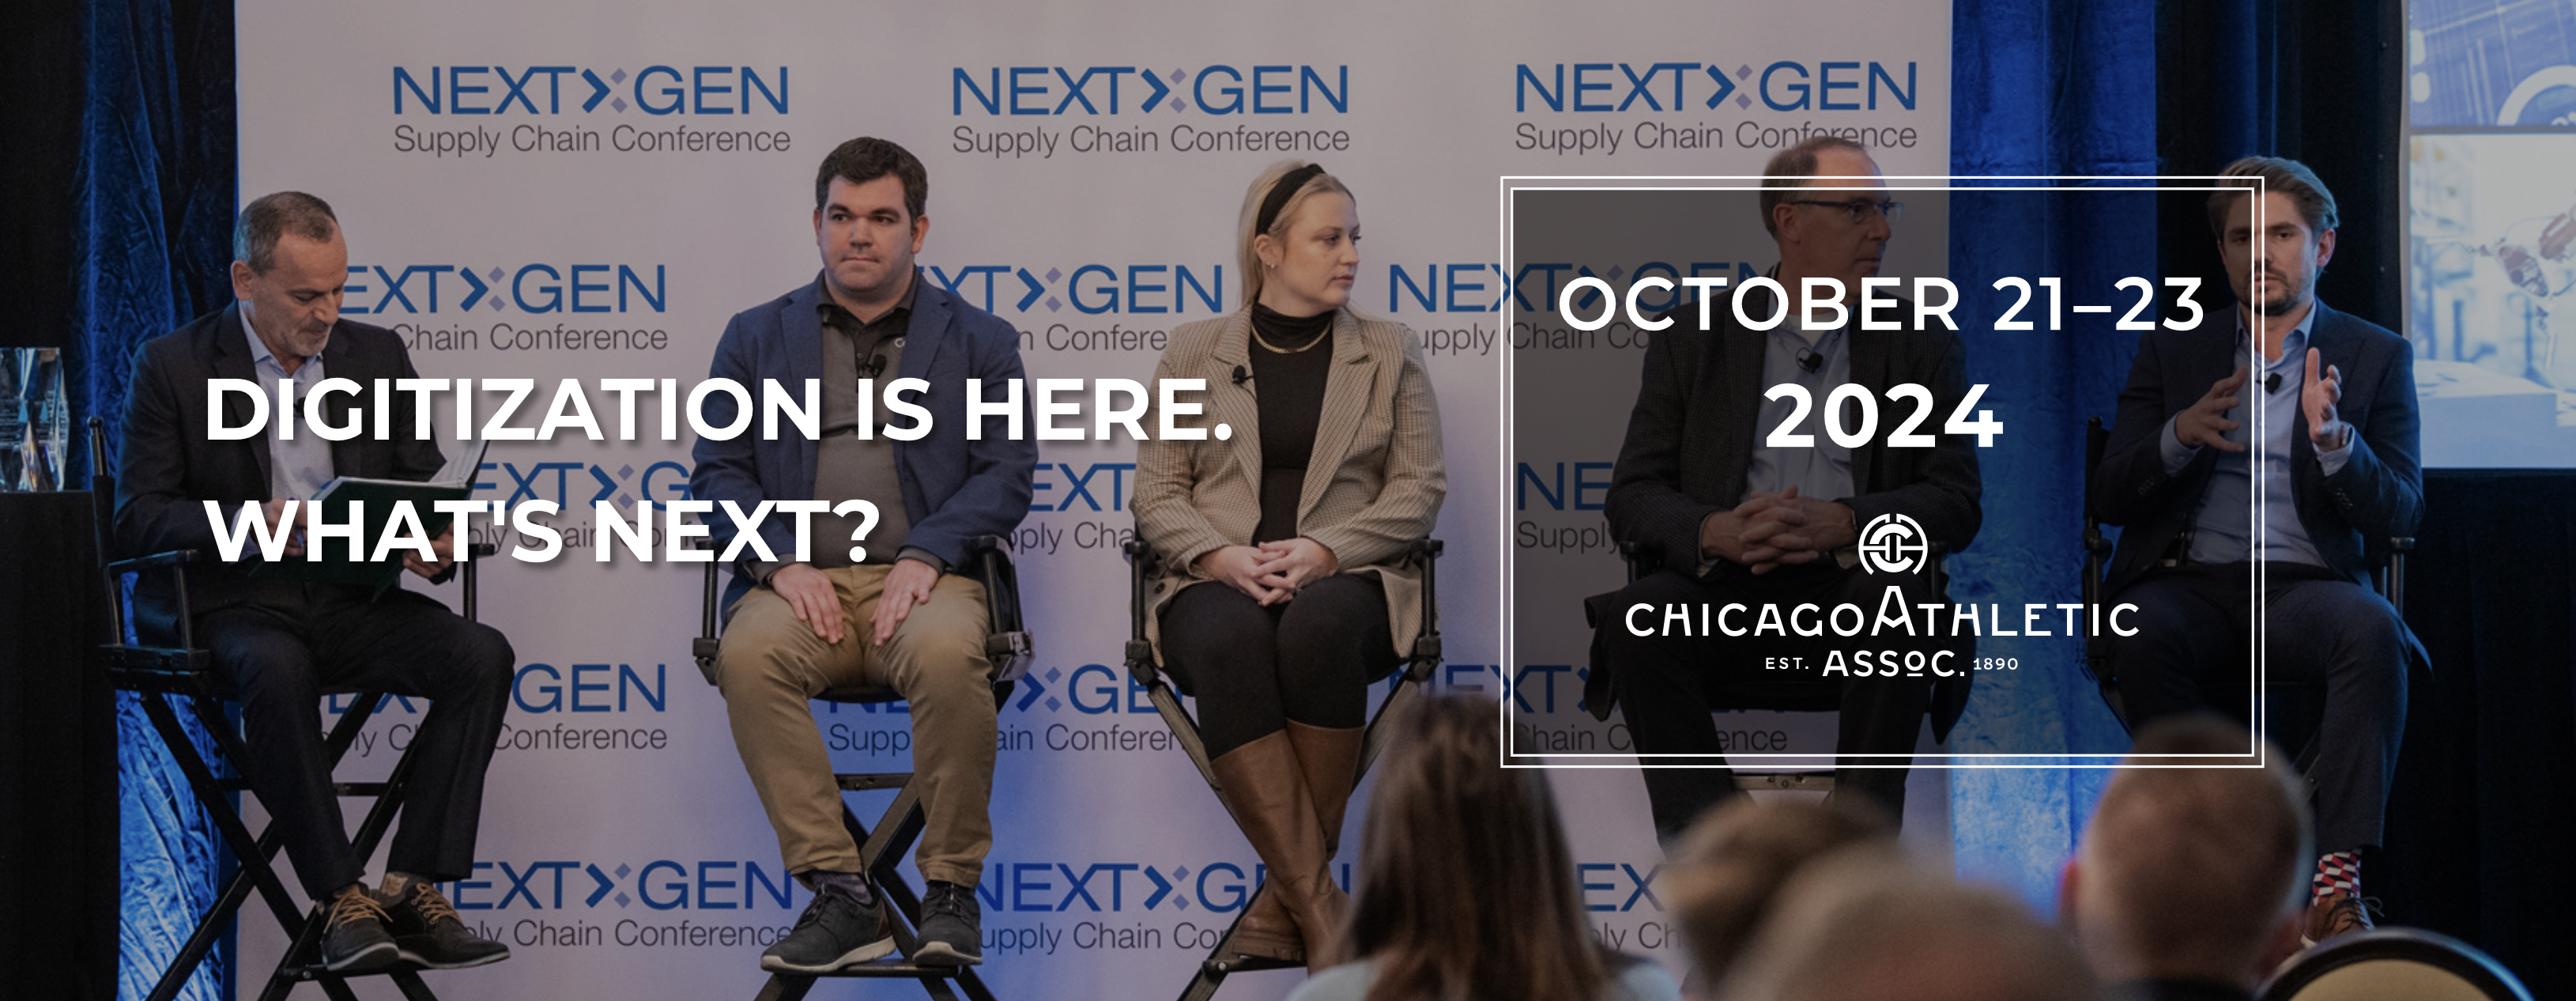 NextGen Supply Chain Conference Announces Keynotes